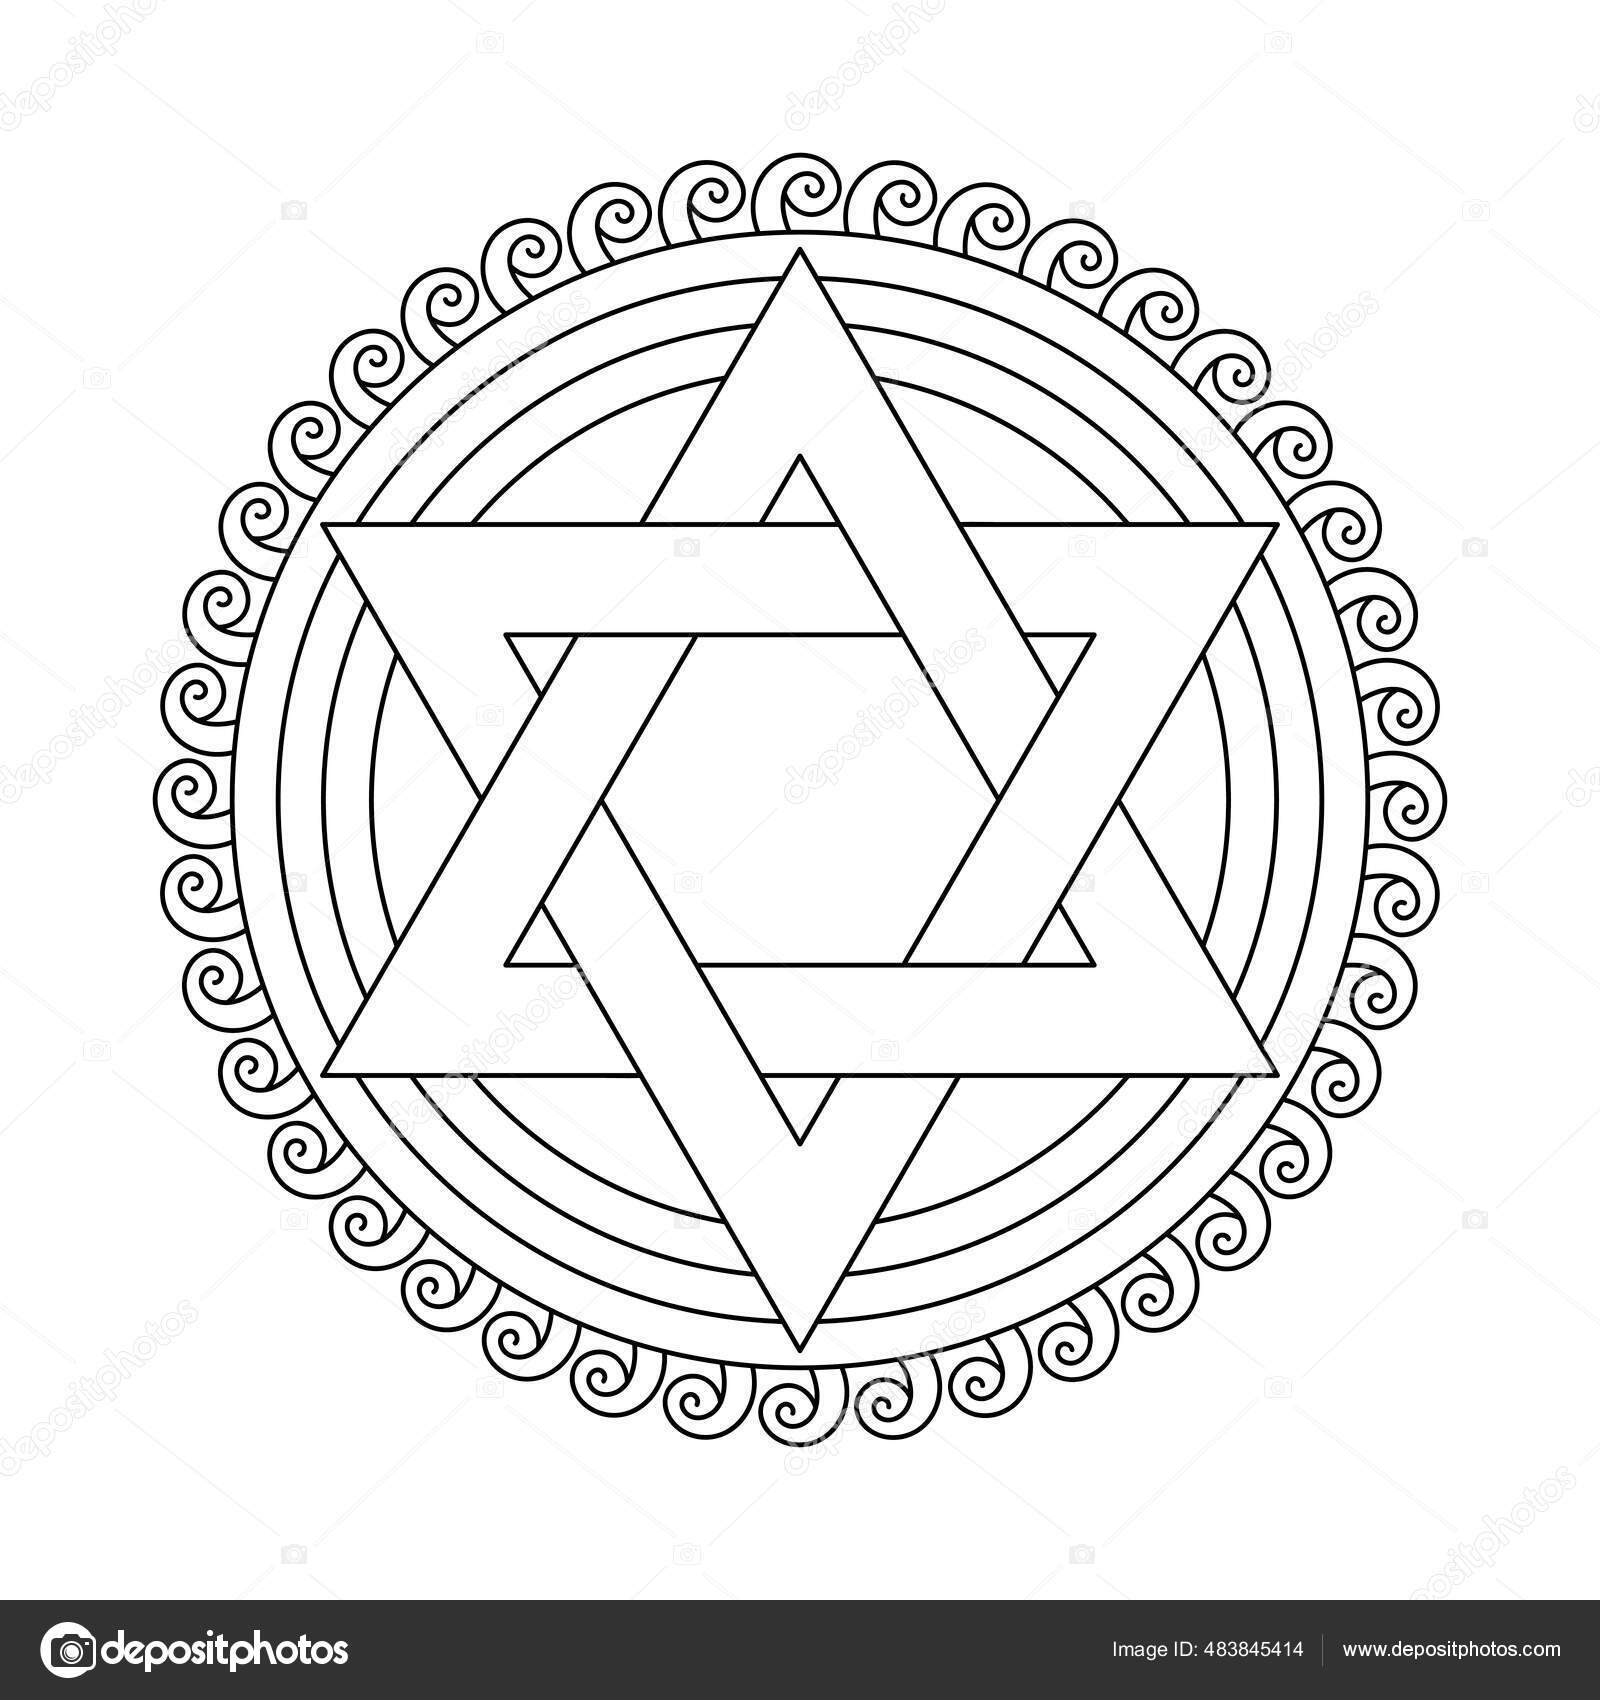 Coloring book jewish star of david mandala with six pointed star vector illustration stock vector by axenova